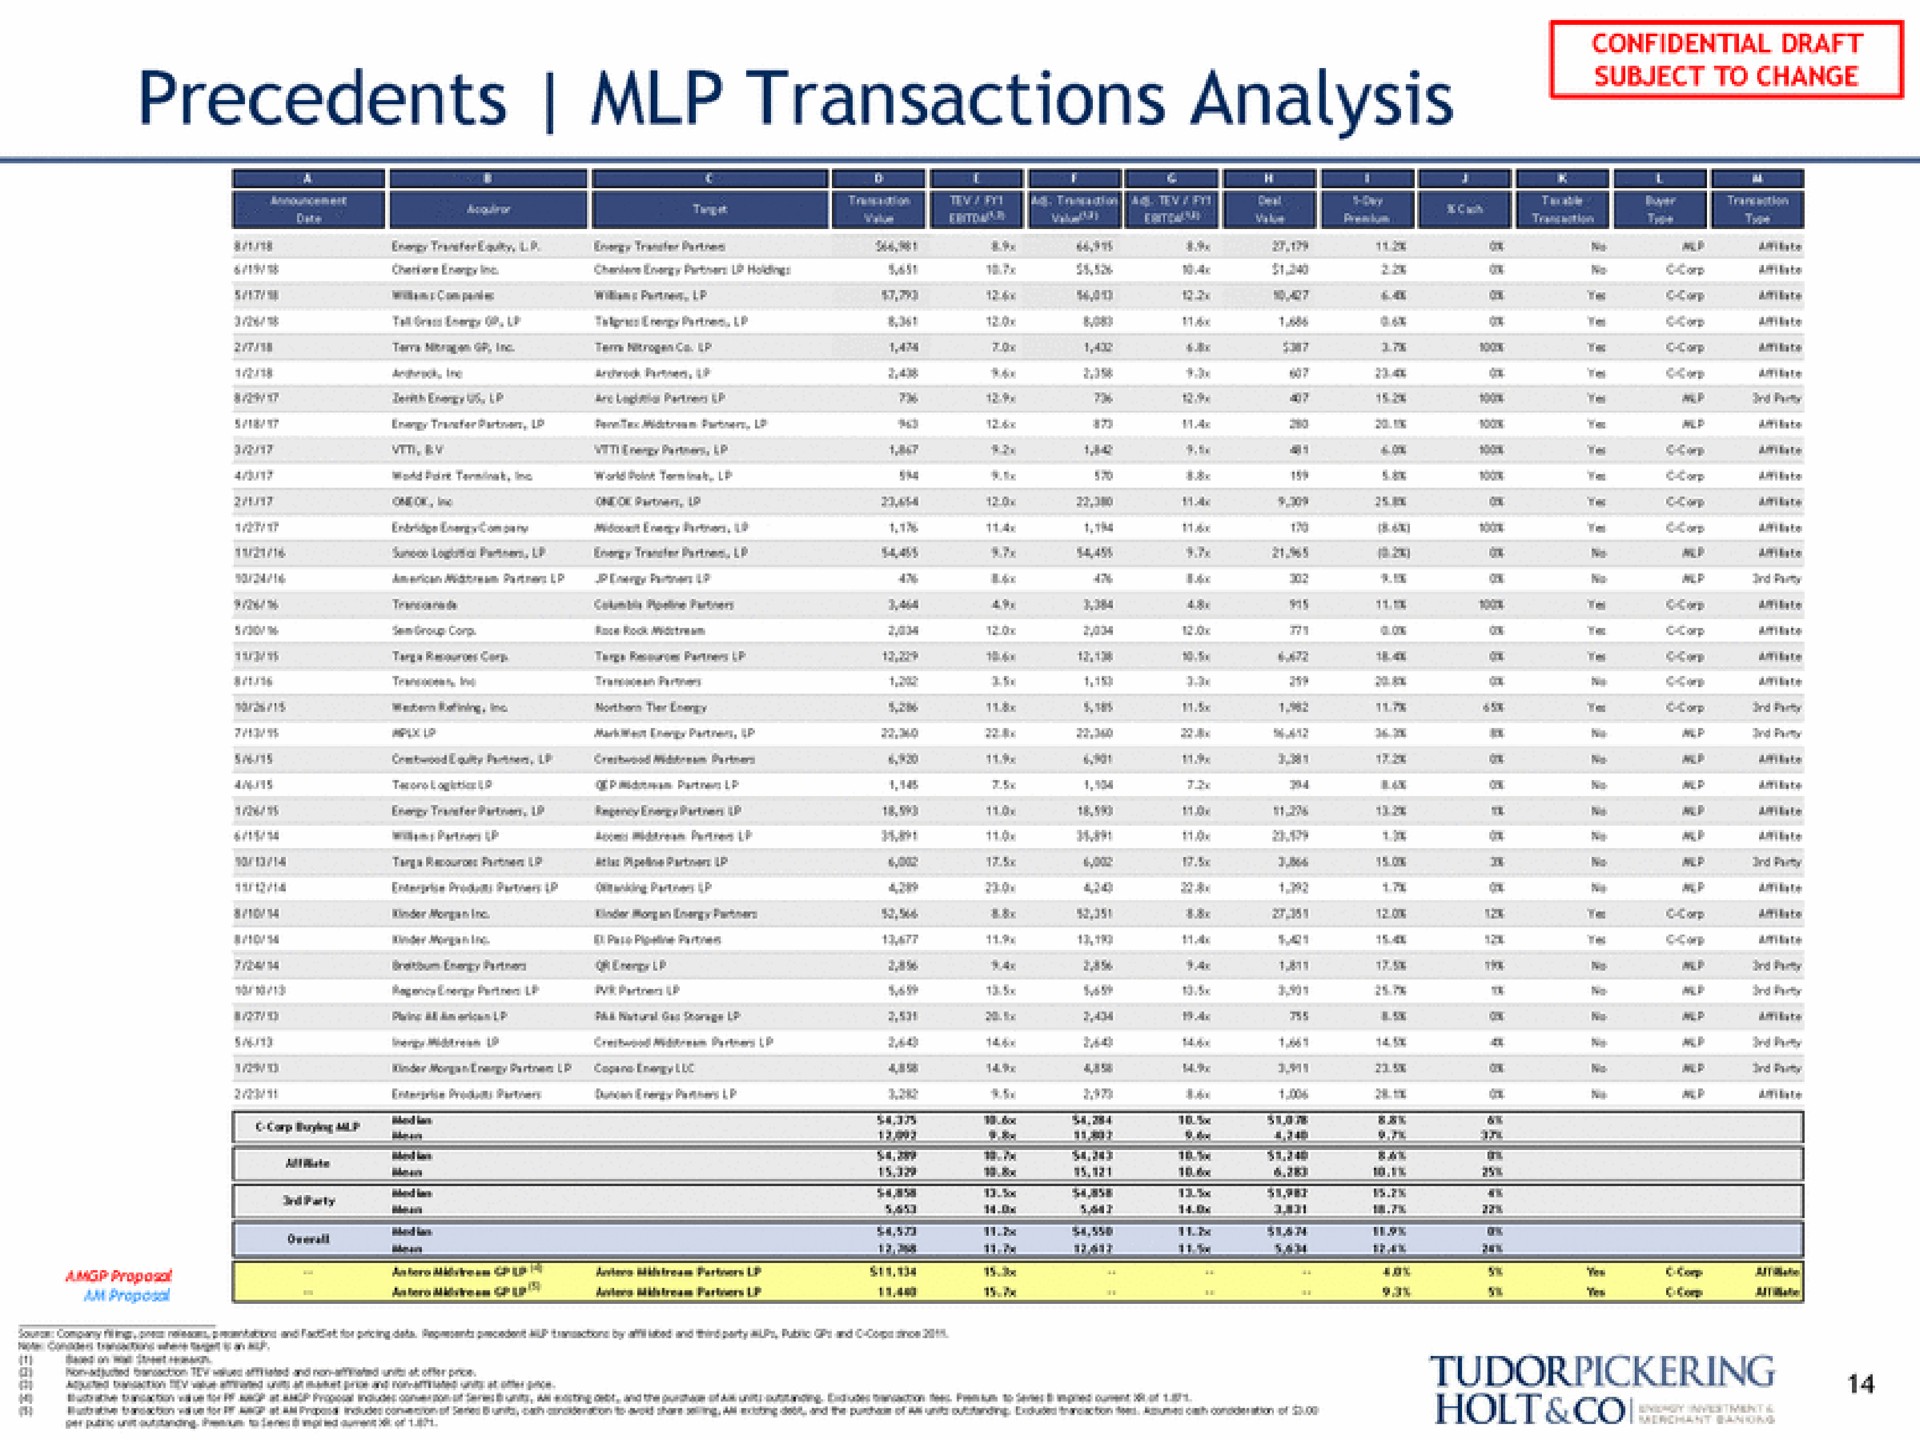 transactions analysis | Tudor, Pickering, Holt & Co